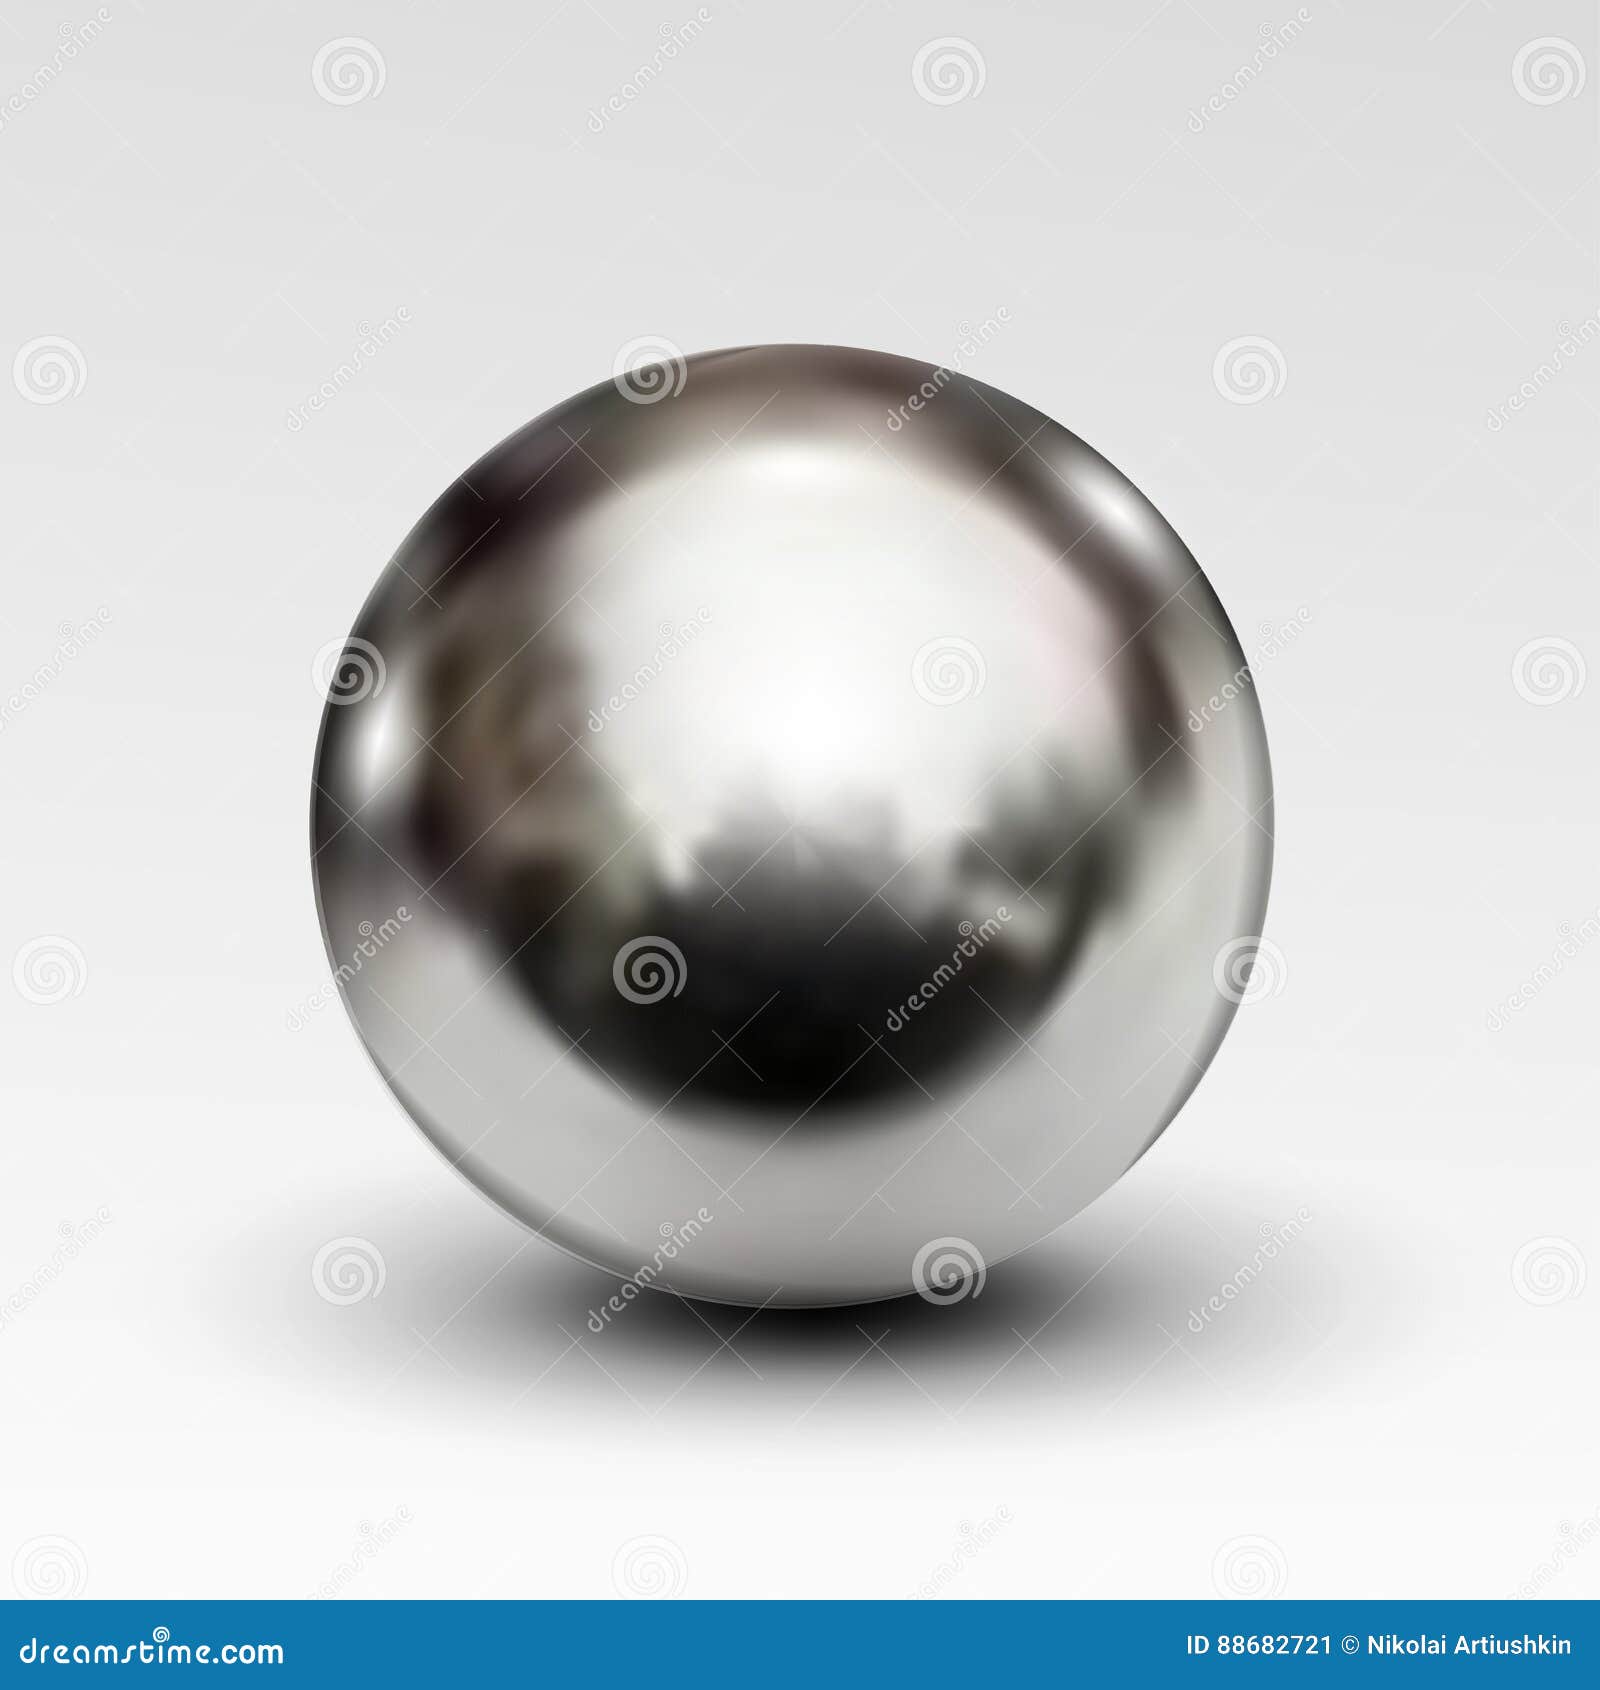 chrome ball realistic on white background